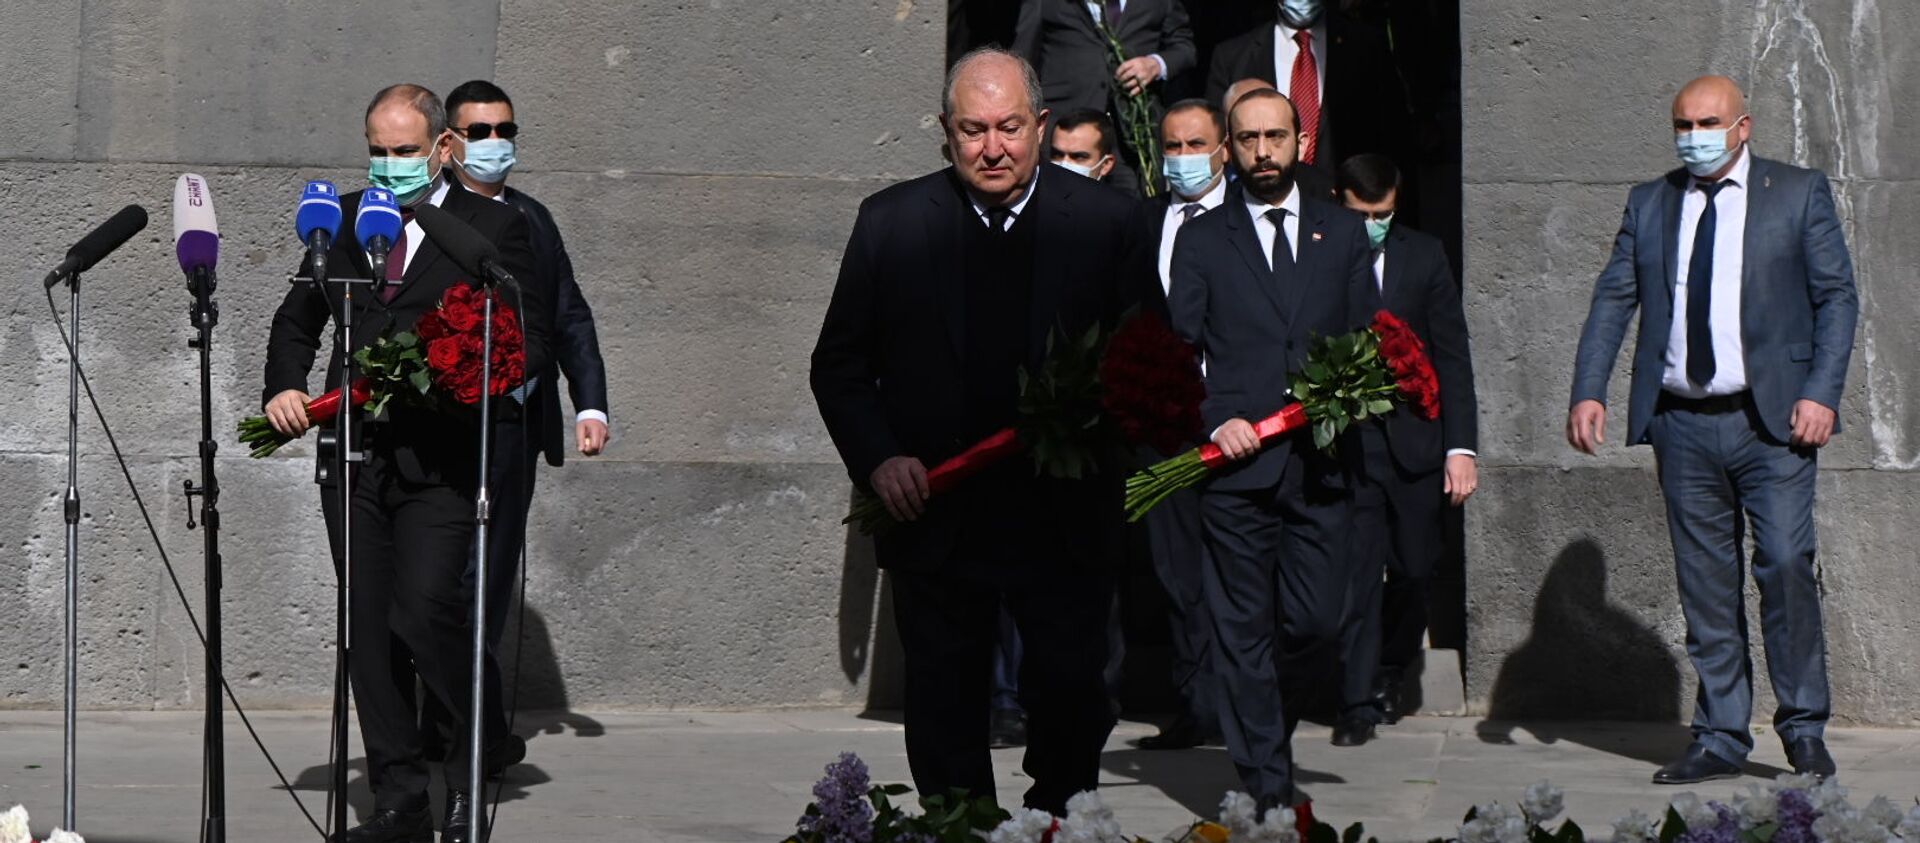 Армен Саркисян посетил мемориальный комплекс Цицернакаберд (24 апреля 2021). Ереван - Sputnik Армения, 1920, 24.04.2021